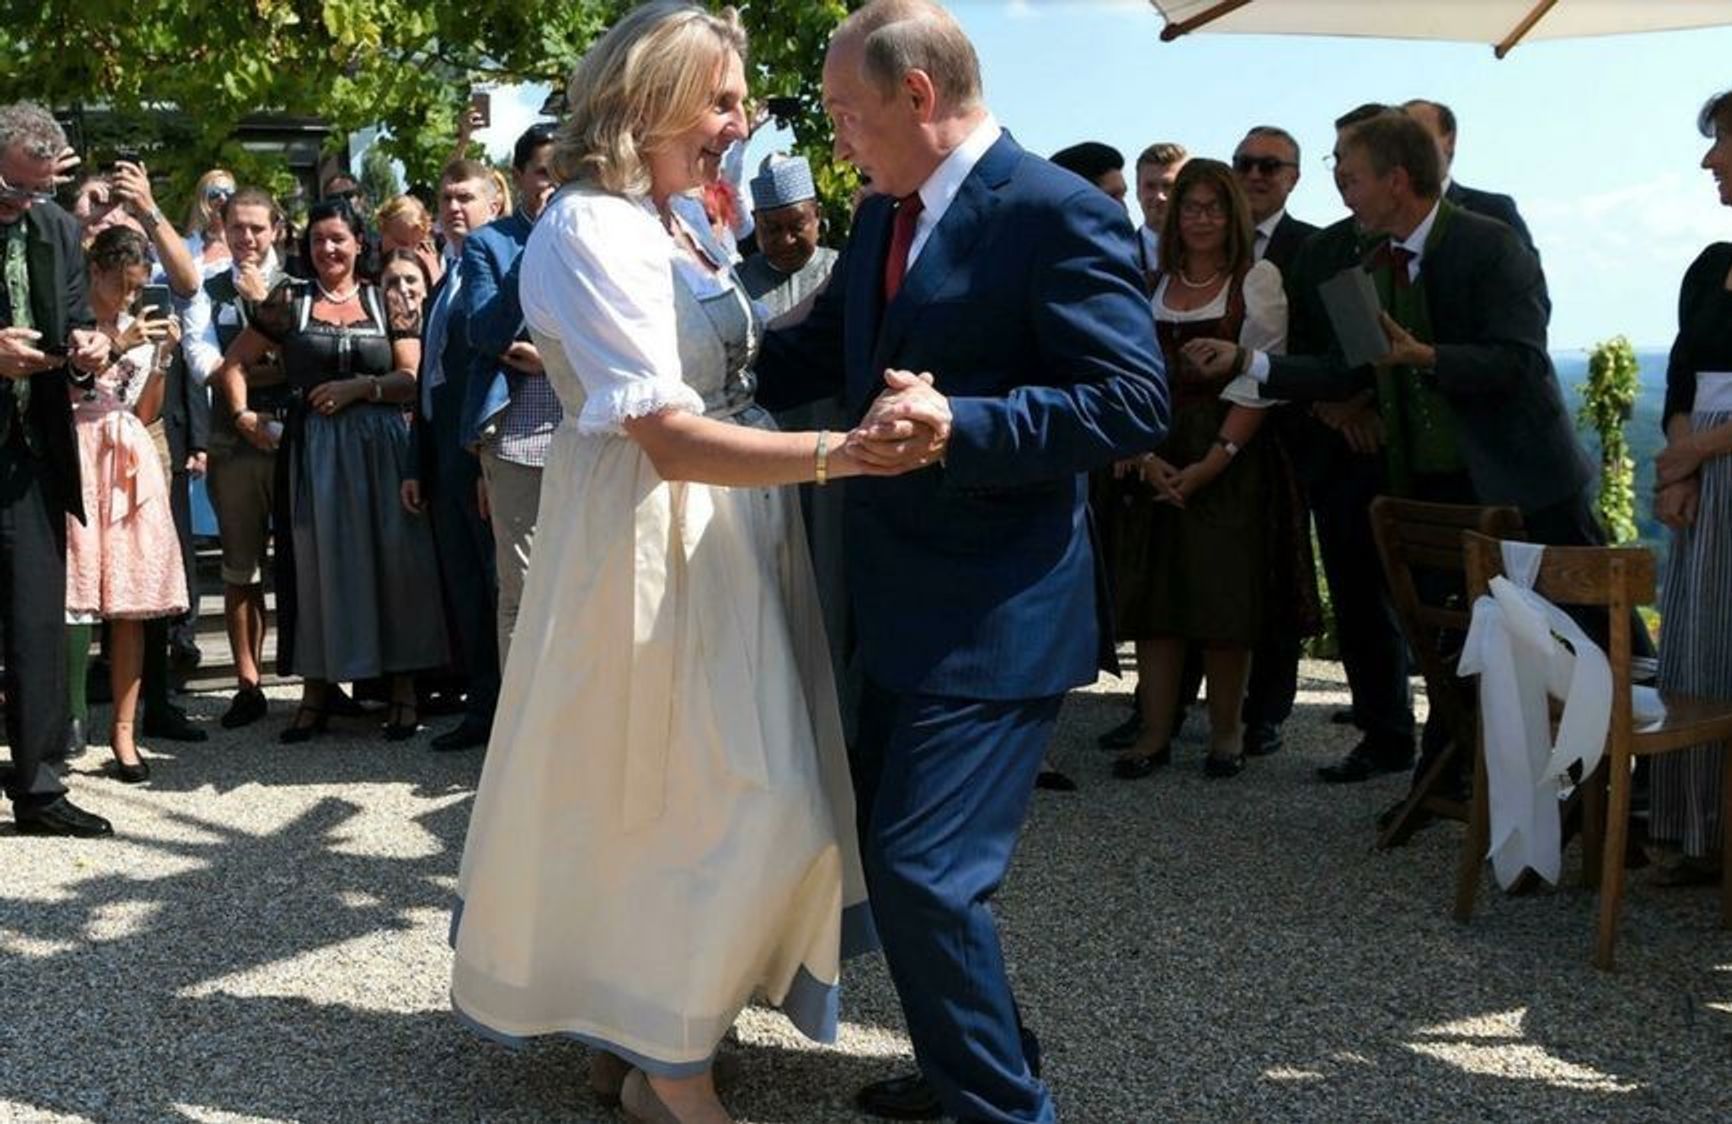 Karin Kneissl dancing with Vladimir Putin at her wedding